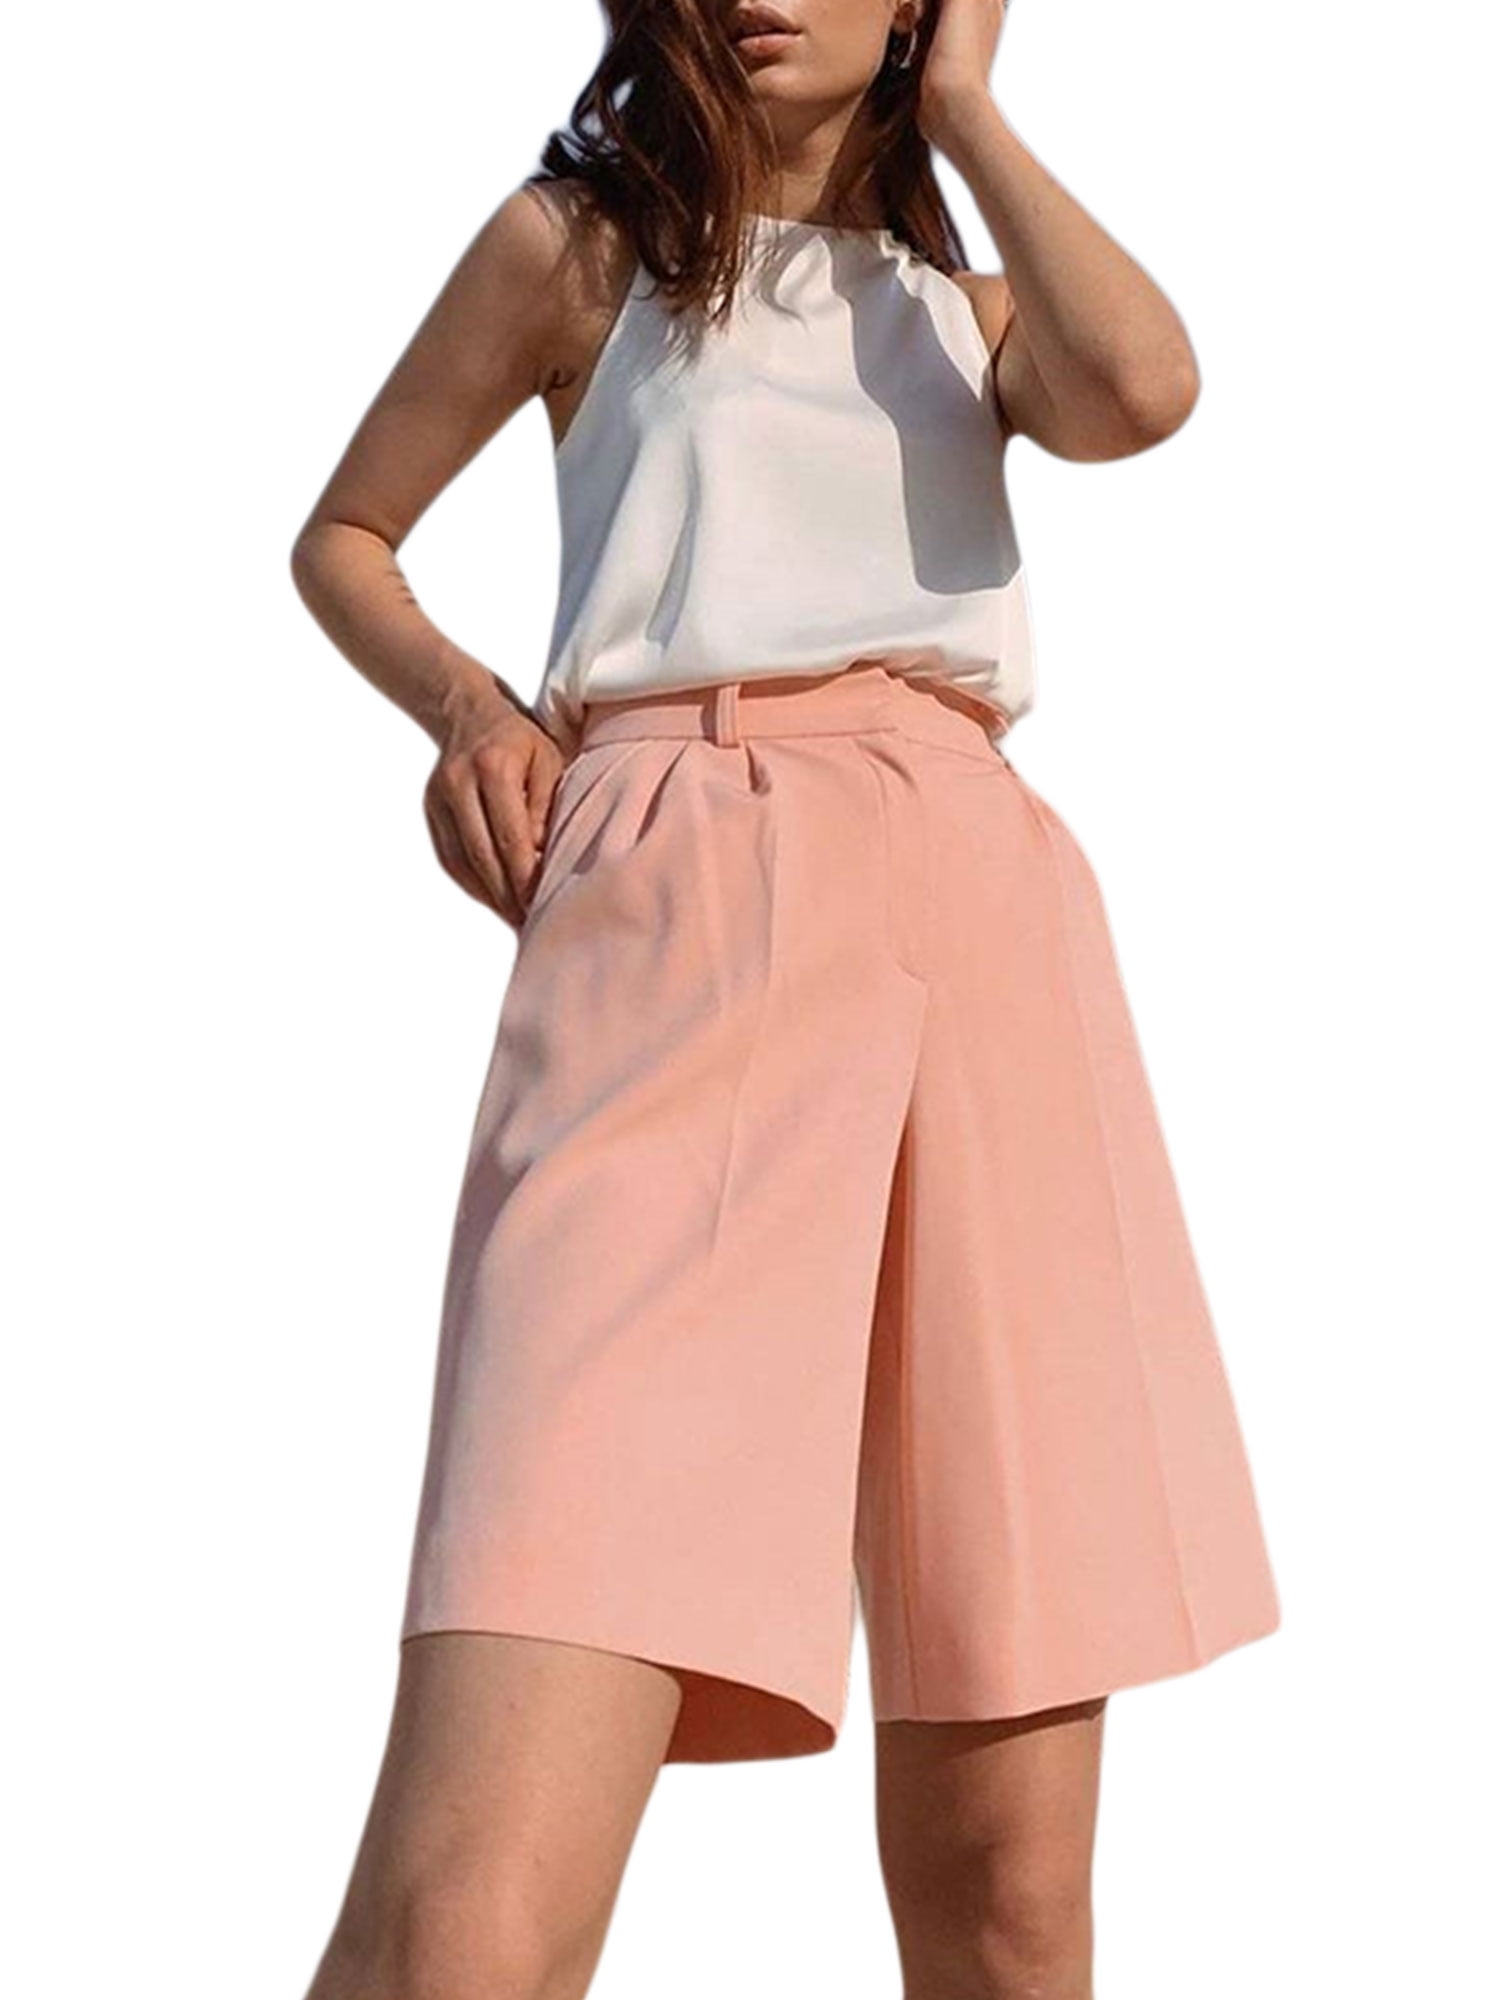 WOMEN FASHION Trousers Slacks Shorts Pink M discount 68% Stradivarius slacks 